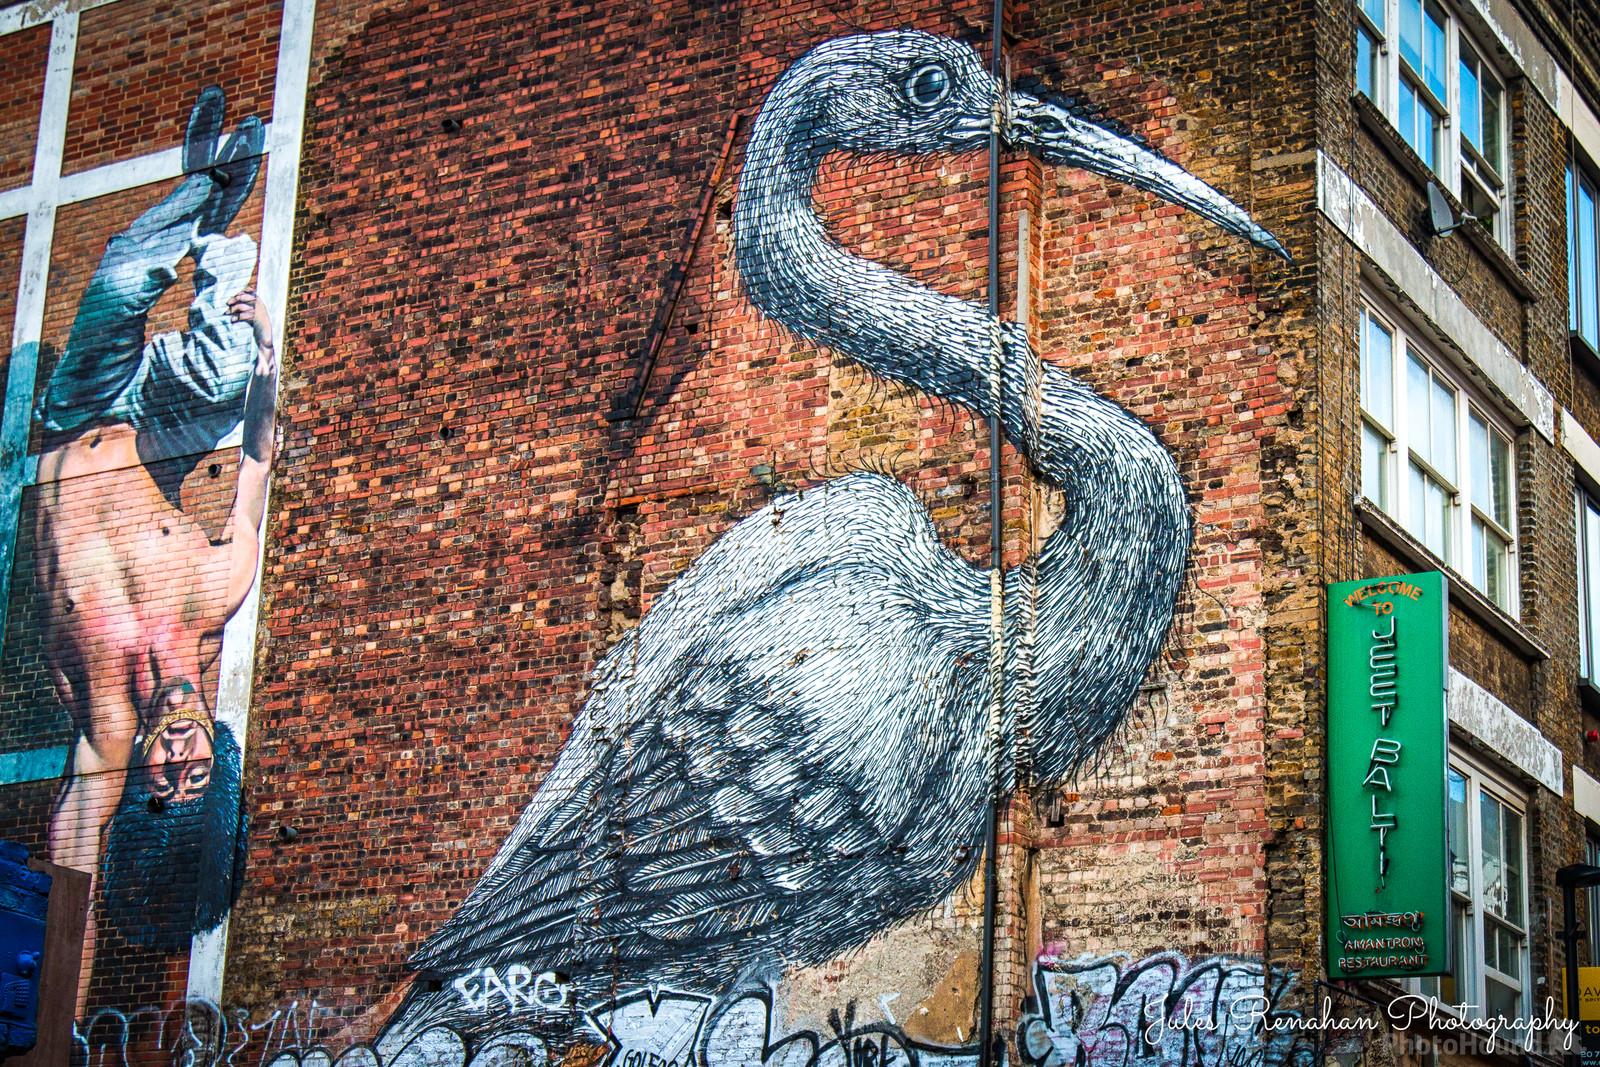 Image of Brick Lane Graffiti by Jules Renahan